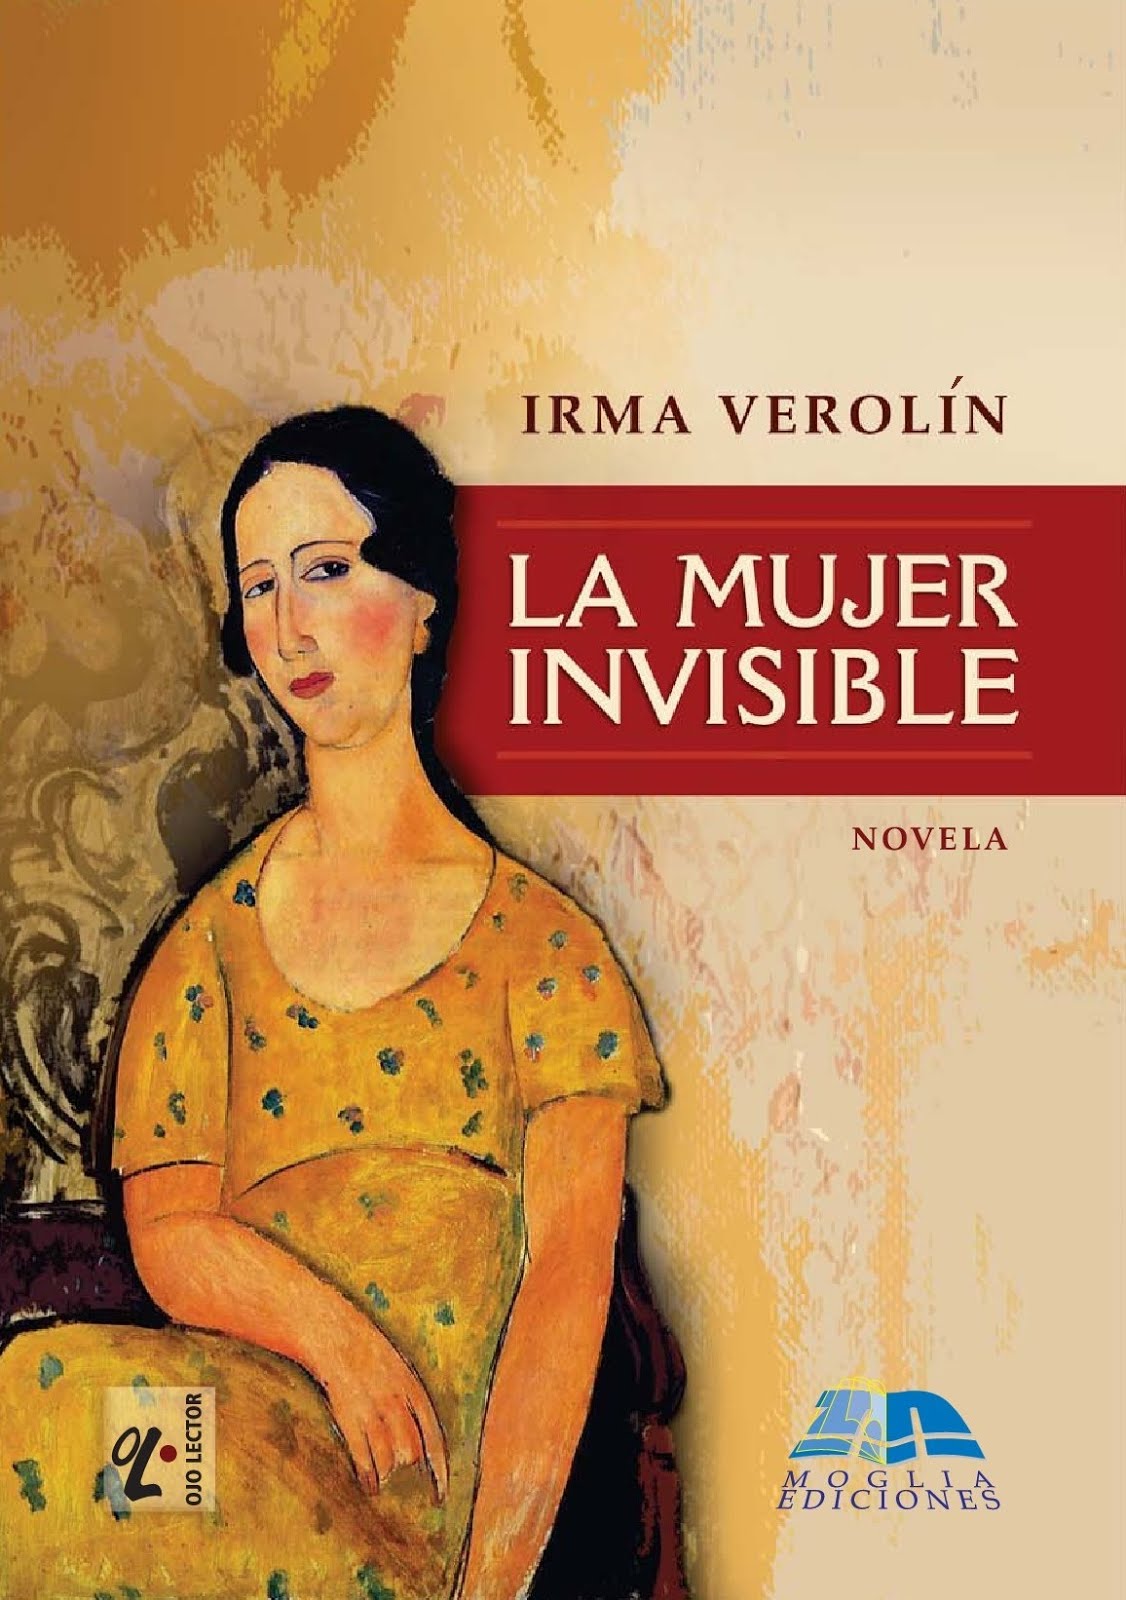 "La mujer invisible". Moglia Ediciones, Corrientes 2018